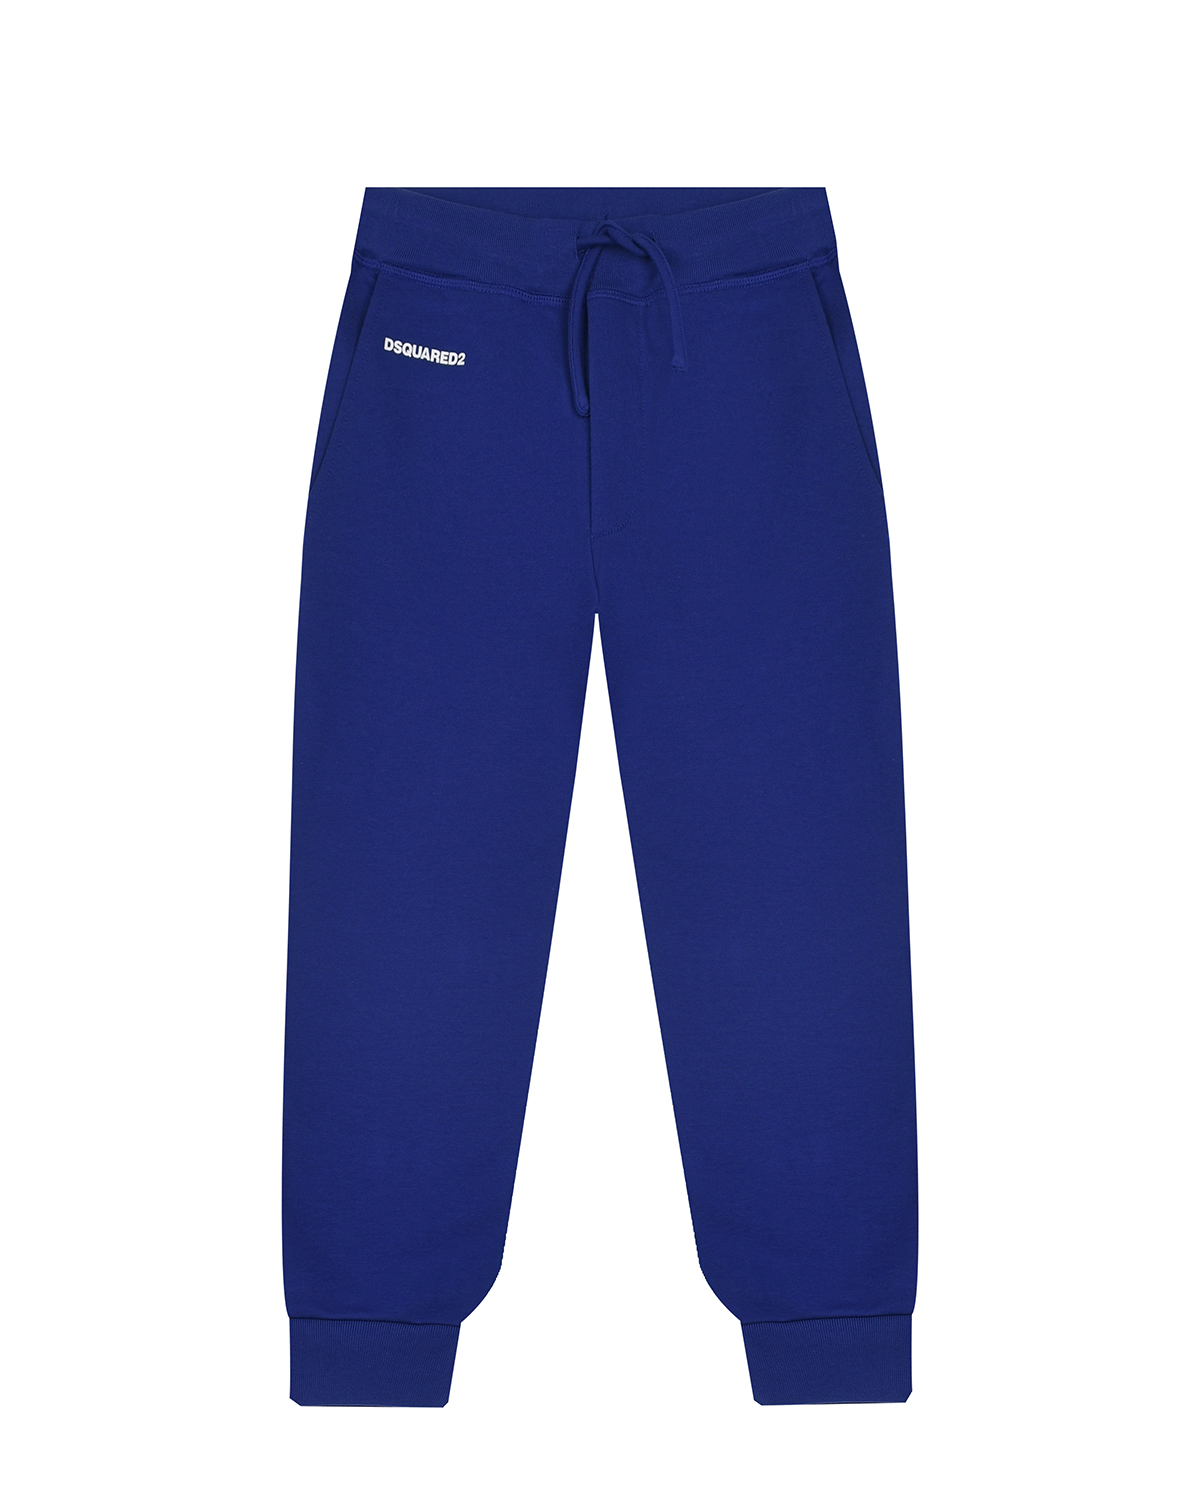 Синие спротивные брюки с белым лого Dsquared2, размер 164, цвет синий